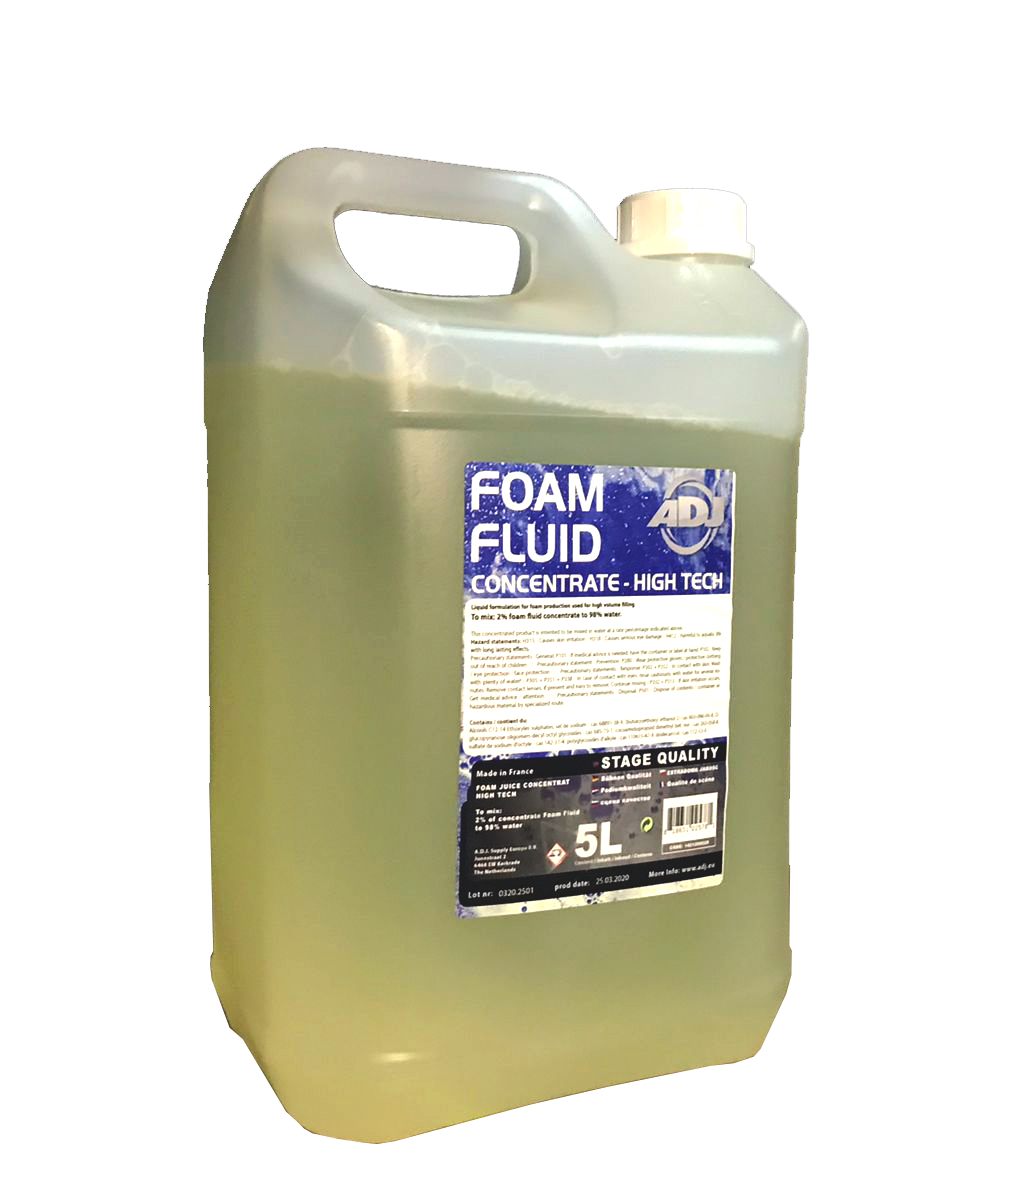 Жидкость для генератора мыльных пузырей American Dj Foam Fluid 5L жидкость для генератора дыма тумана le maitre global deluxe fluid 5 ltr